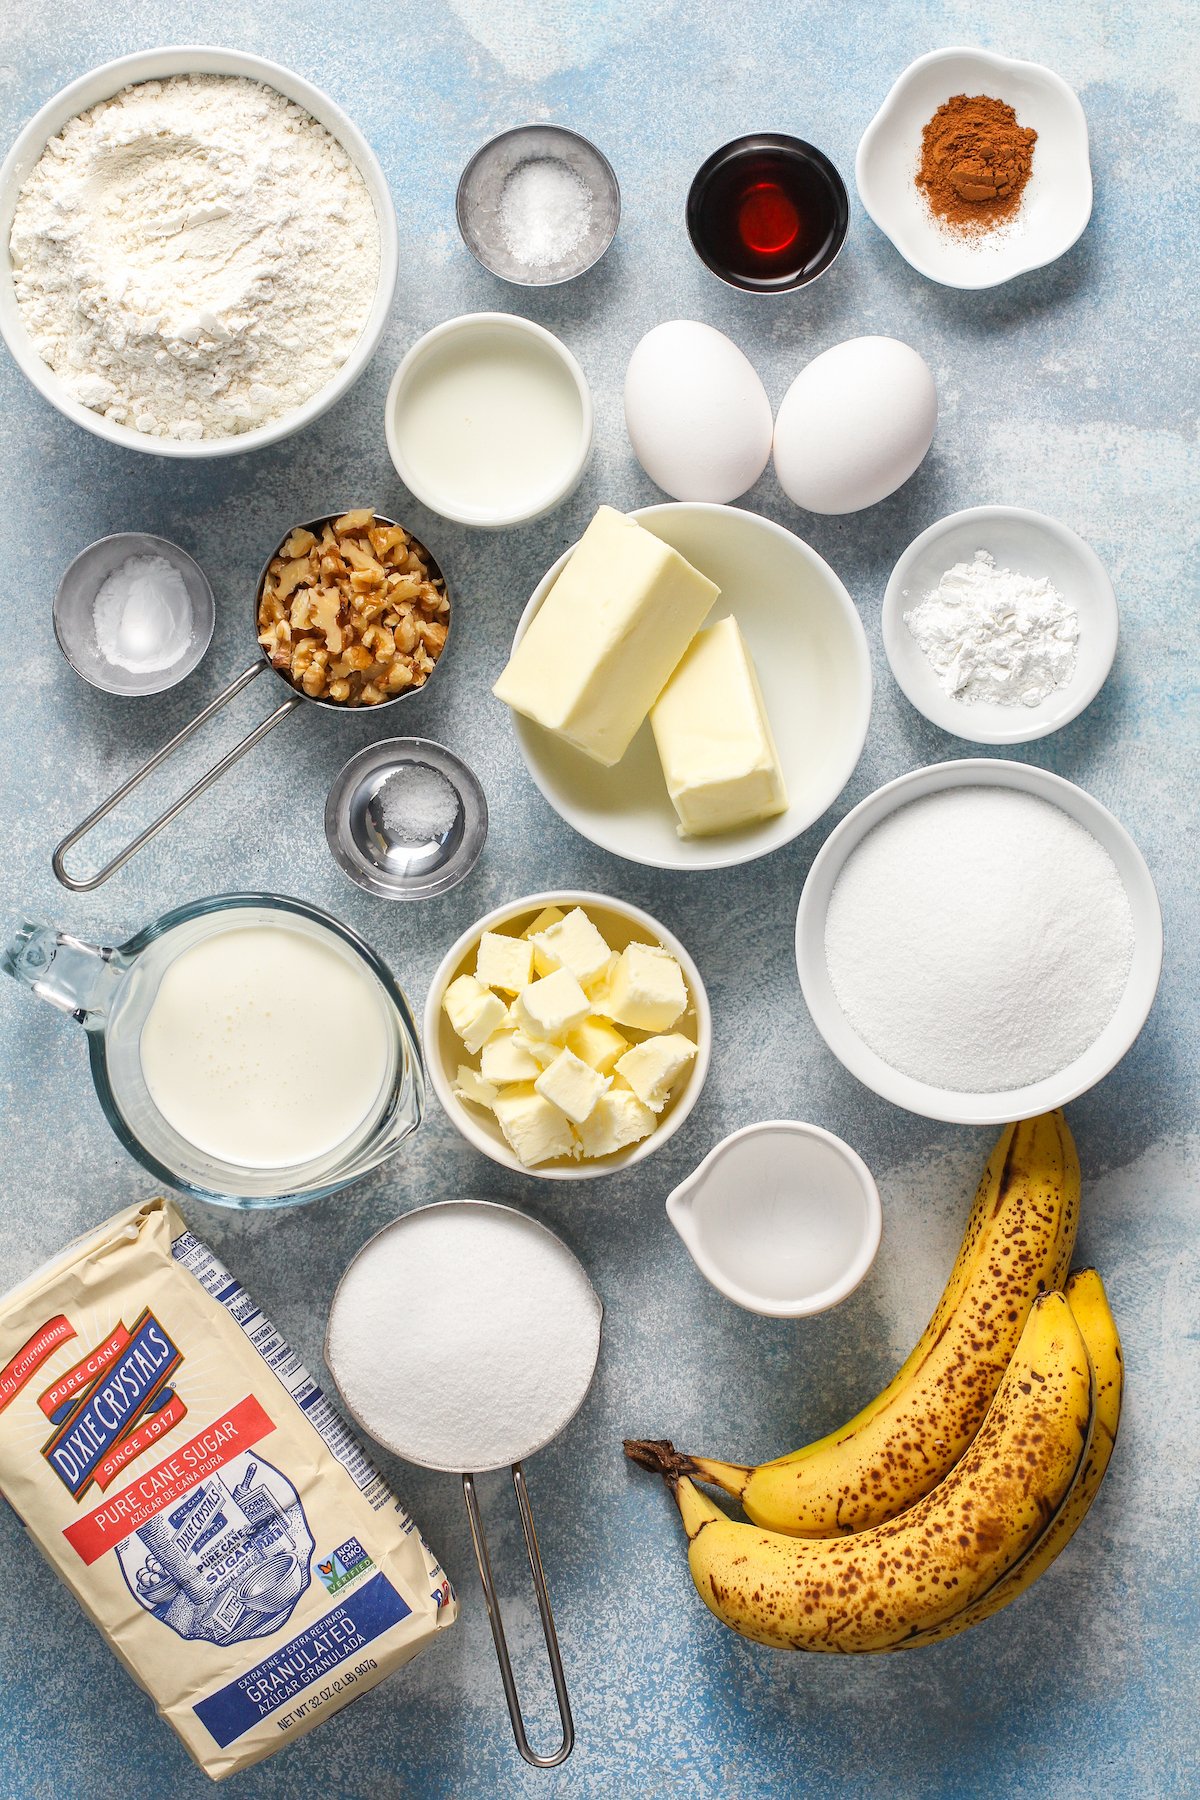 From top left: Flour, baking soda, vanilla, cinnamon, salt, walnuts, butter, baking powder, heavy cream, granulated sugar, water, bananas.